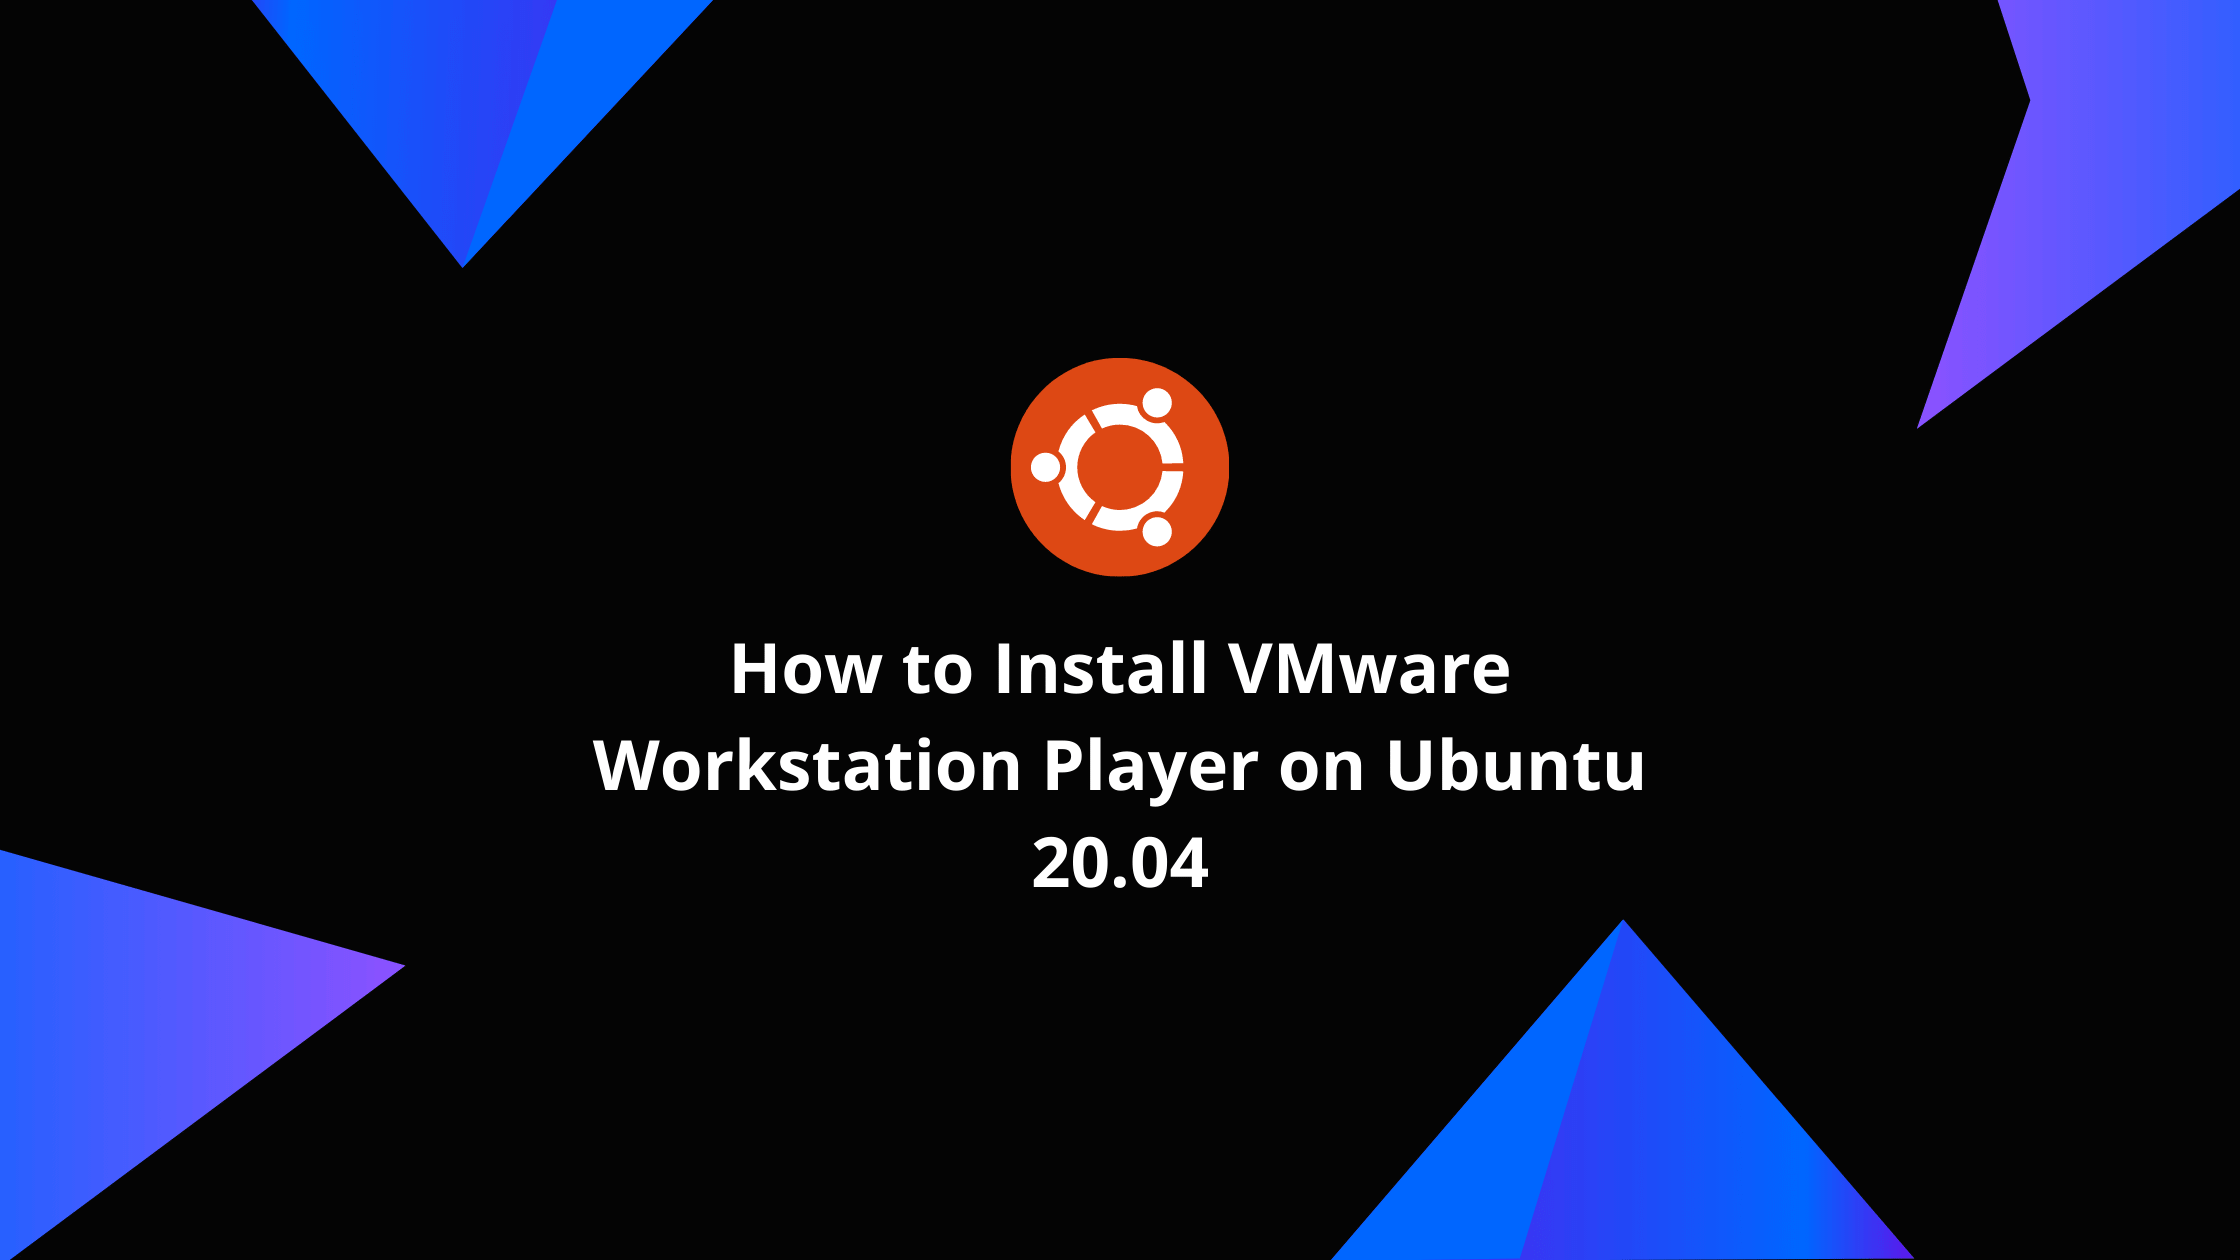 vmware workstation for ubuntu free download 32 bit